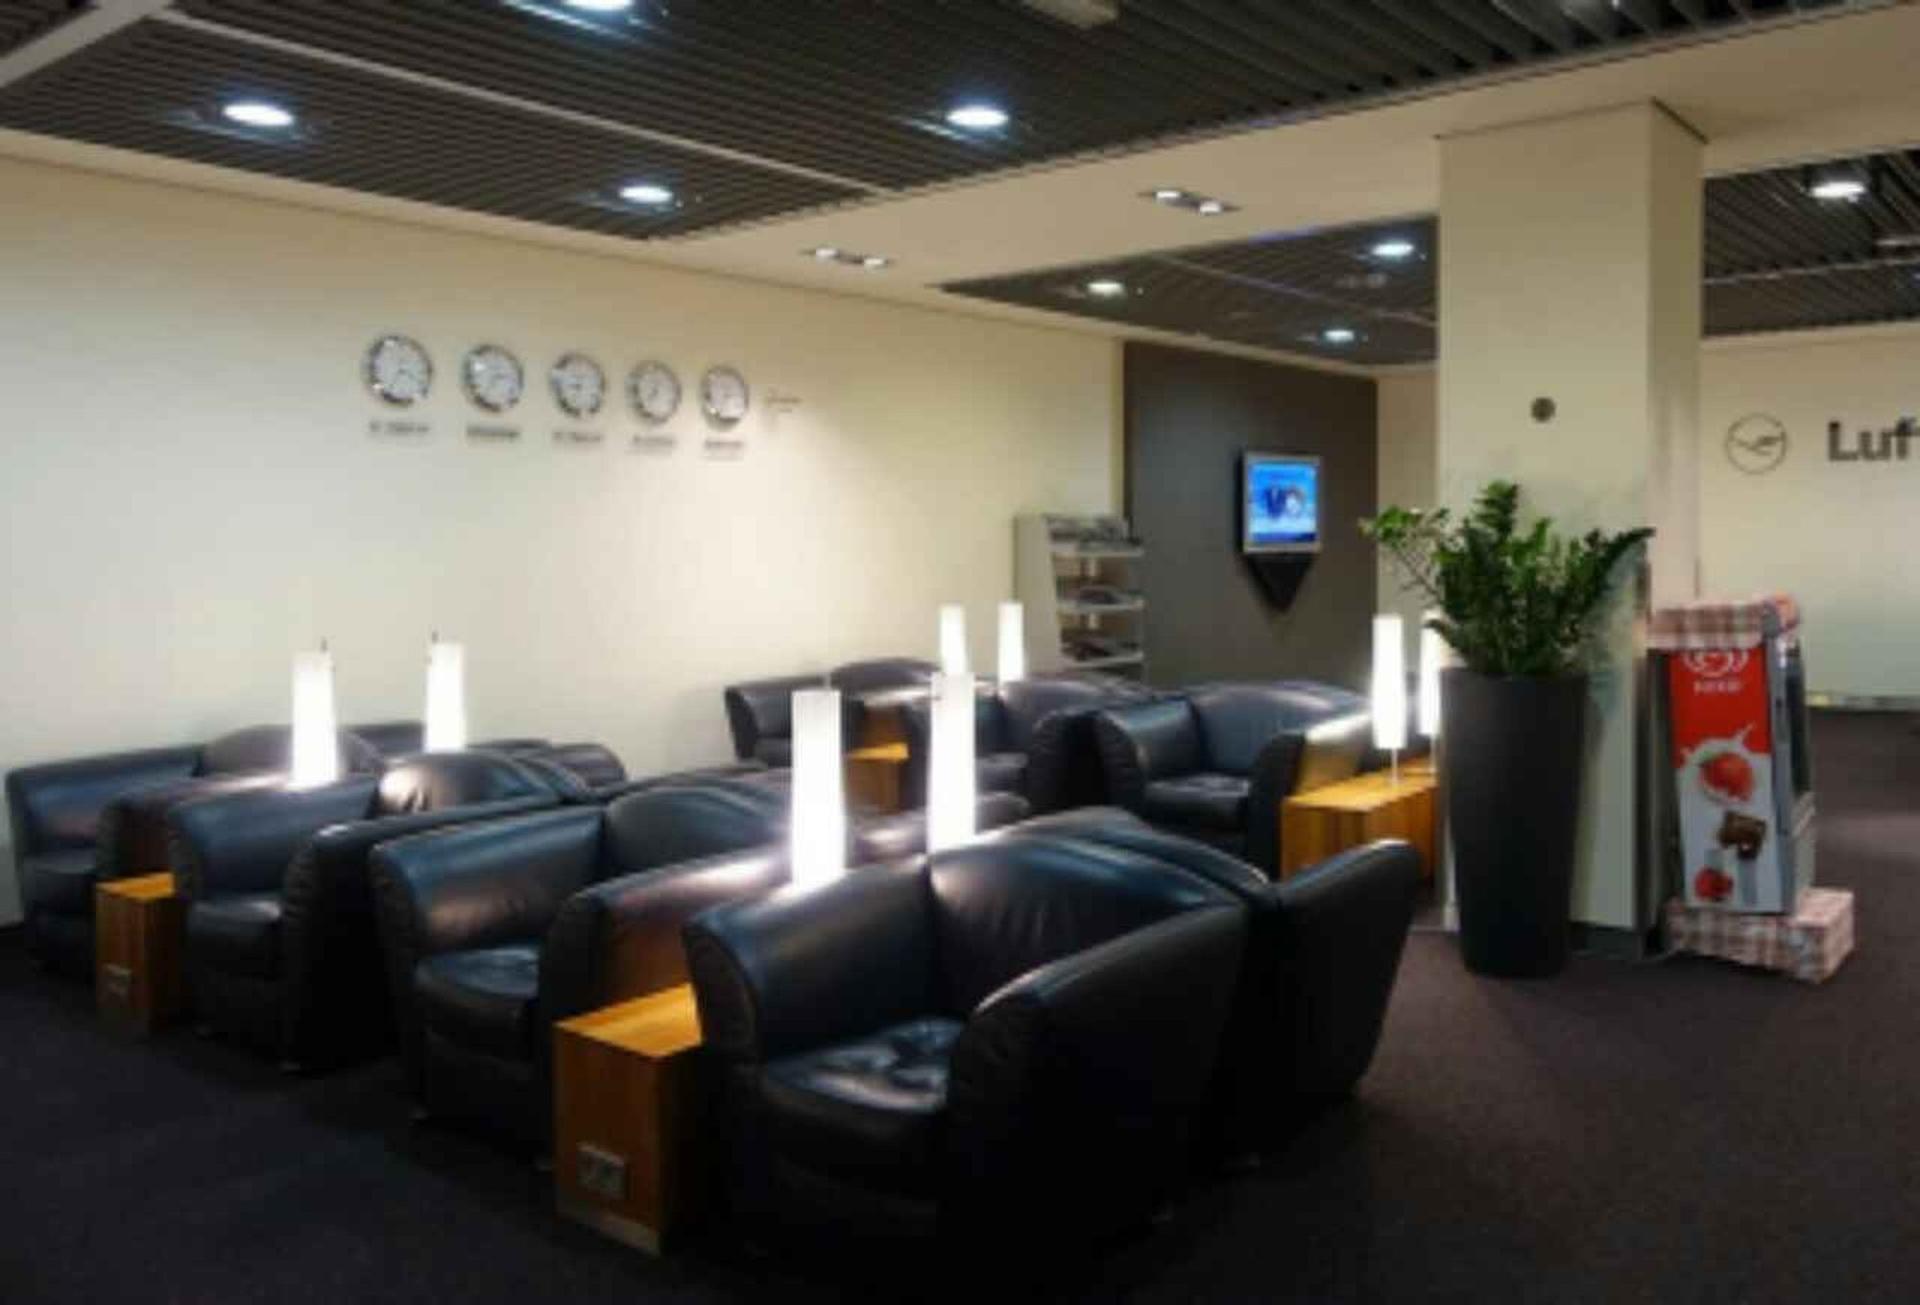 Lufthansa Senator Lounge image 1 of 6